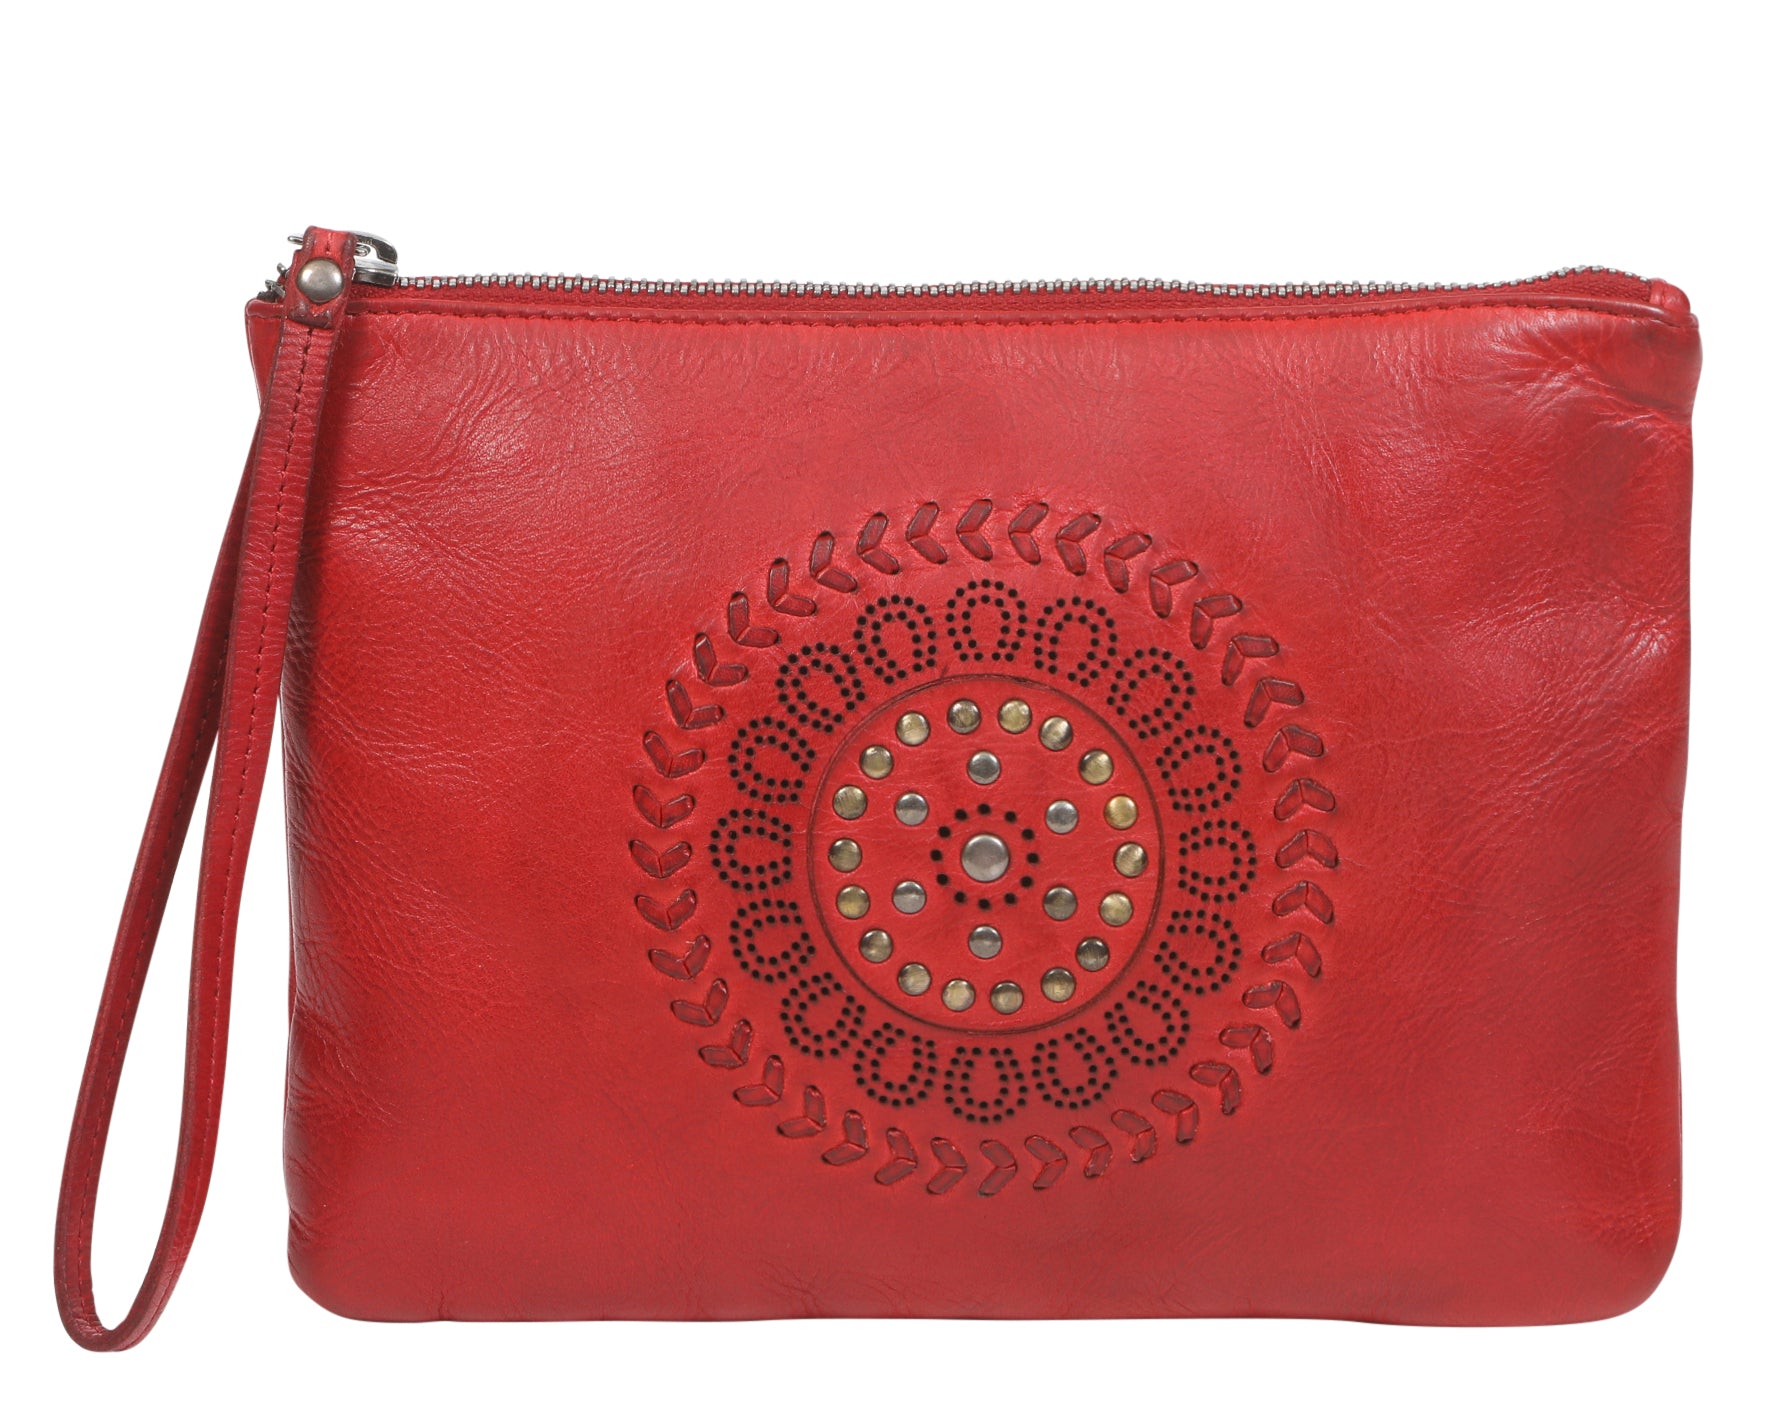 Modapelle Women's Leather Wrist Bag